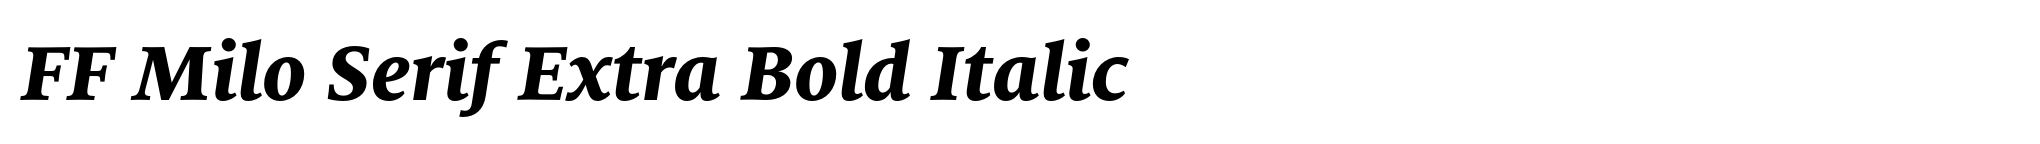 FF Milo Serif Extra Bold Italic image